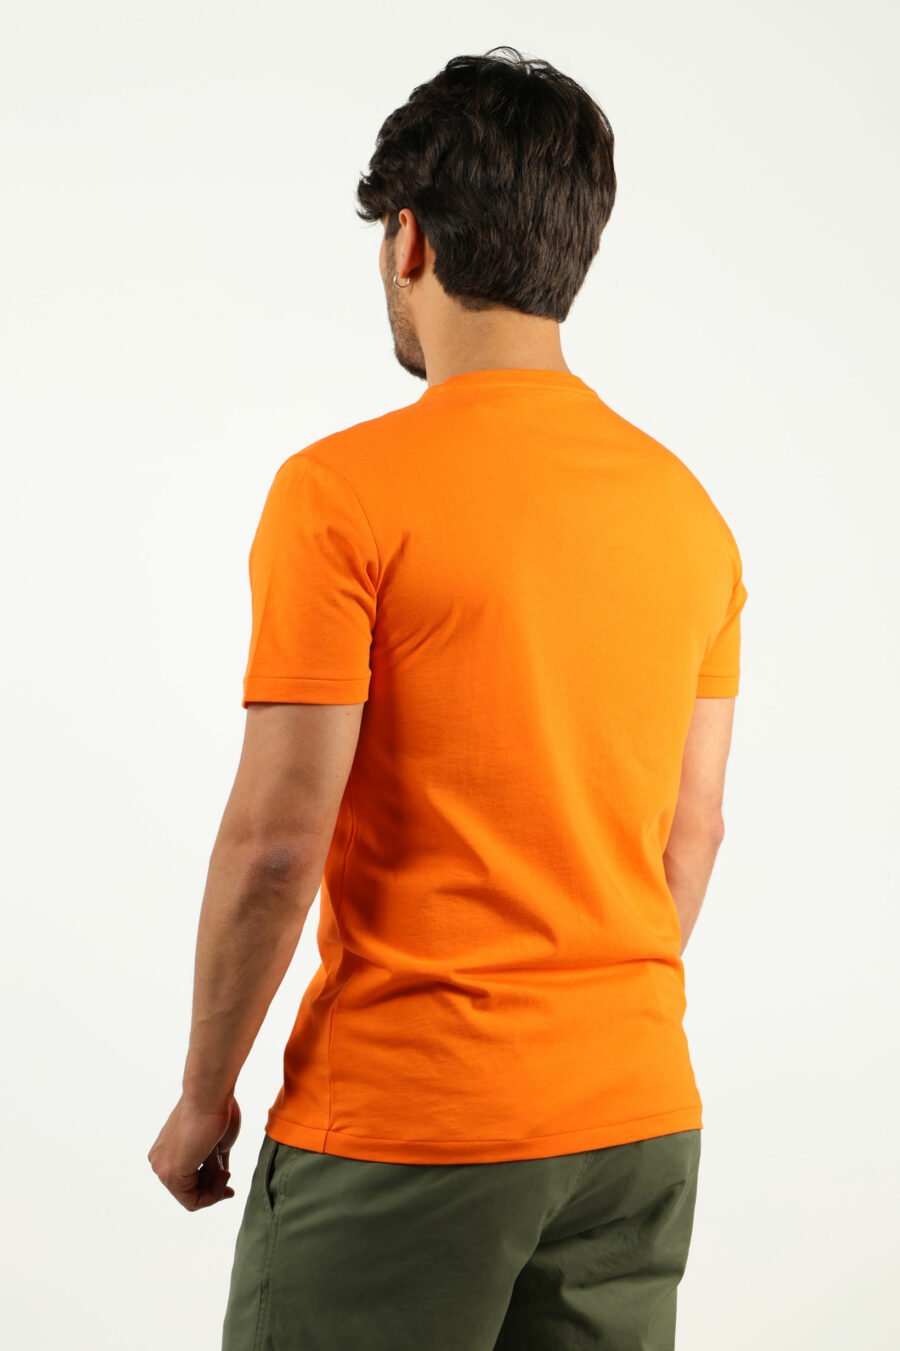 Camiseta naranja y verde con minilogo "polo" - number14003